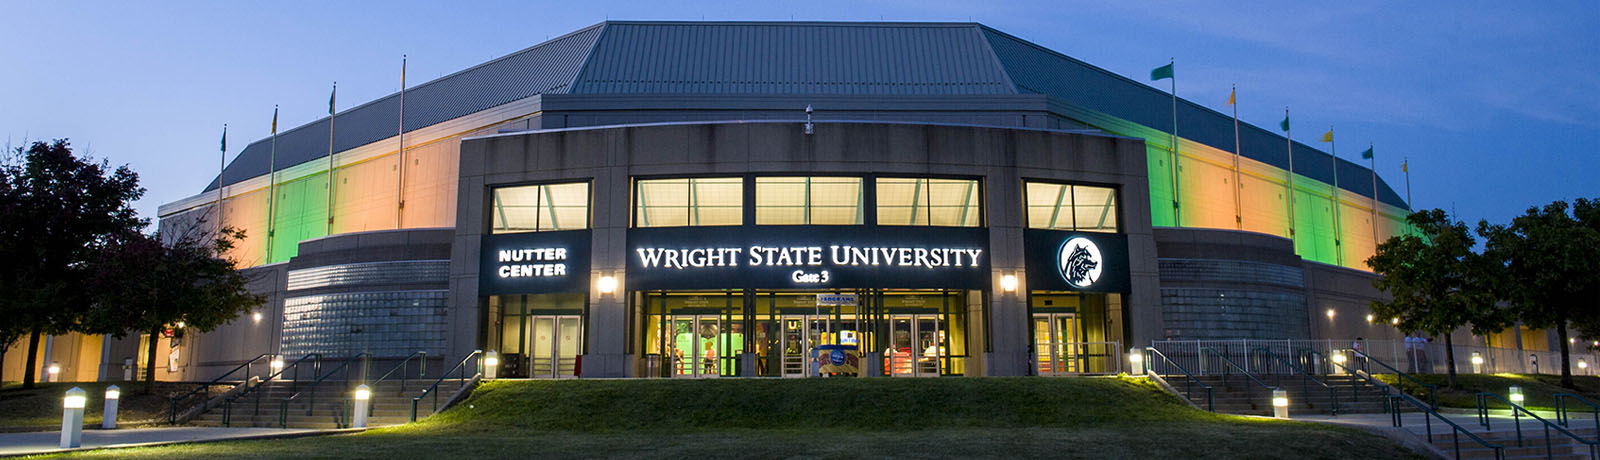 Du học Mỹ bang Ohio Trường Wright State University